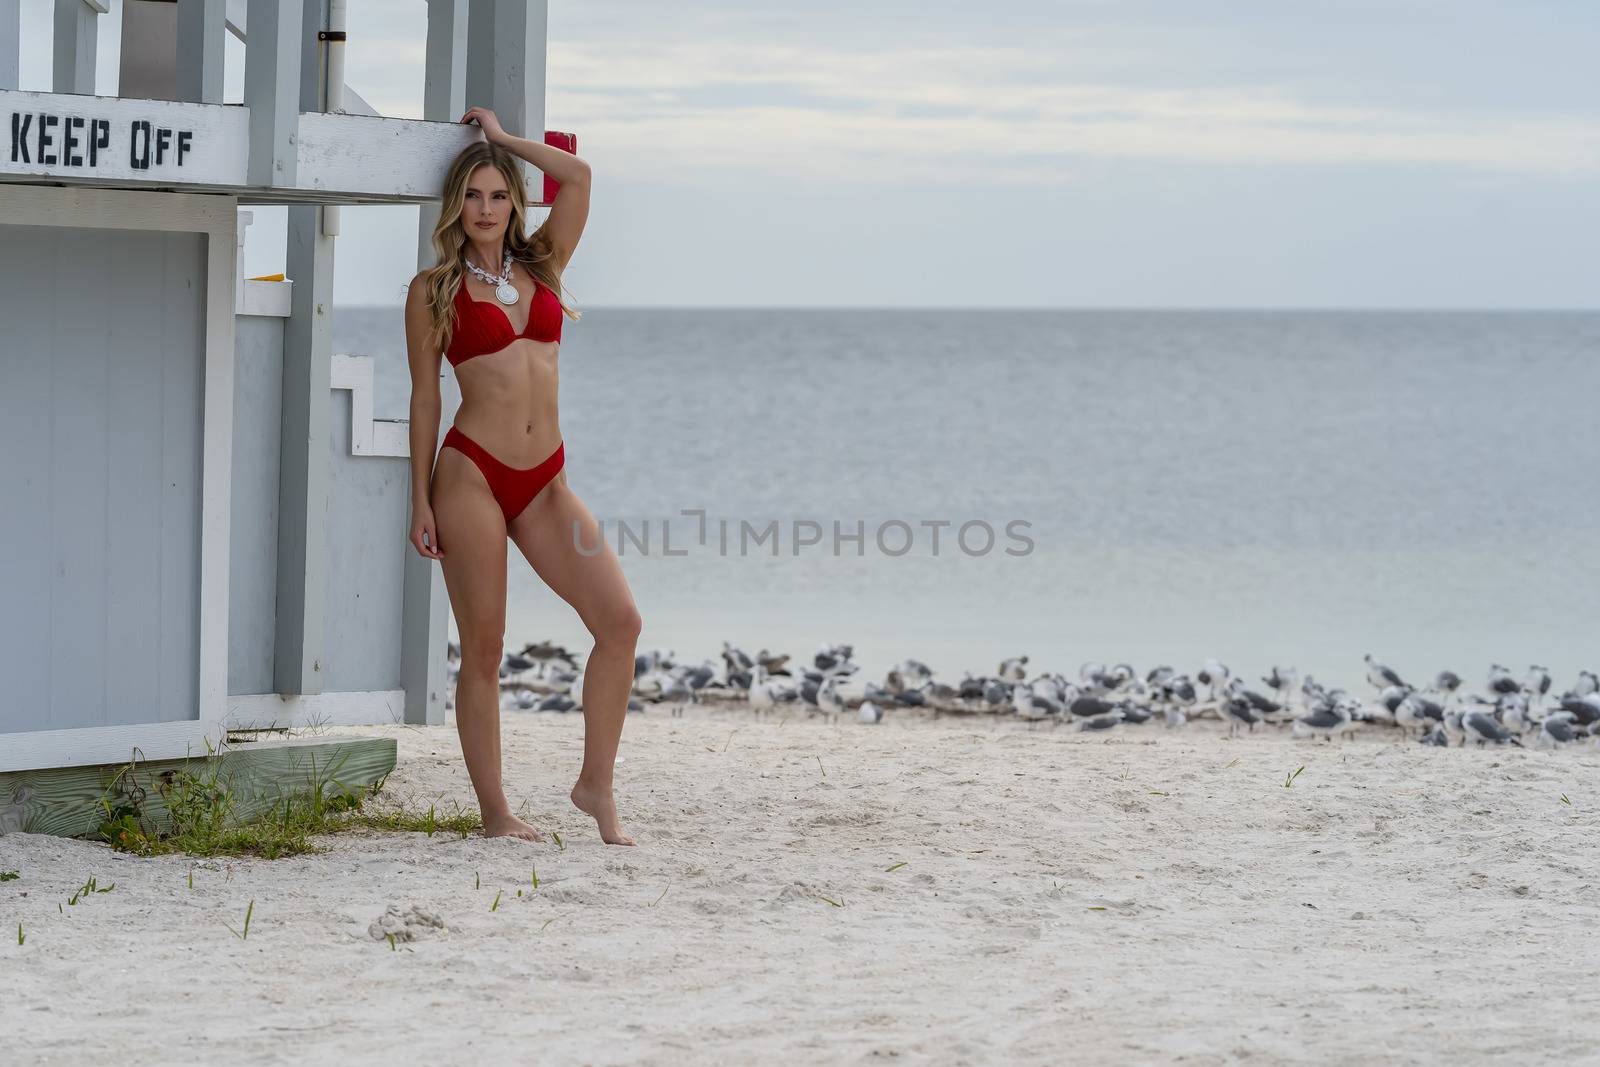 A beautiful blonde bikini model enjoys the weather outdoors on the beach while posing near a lifeguard station